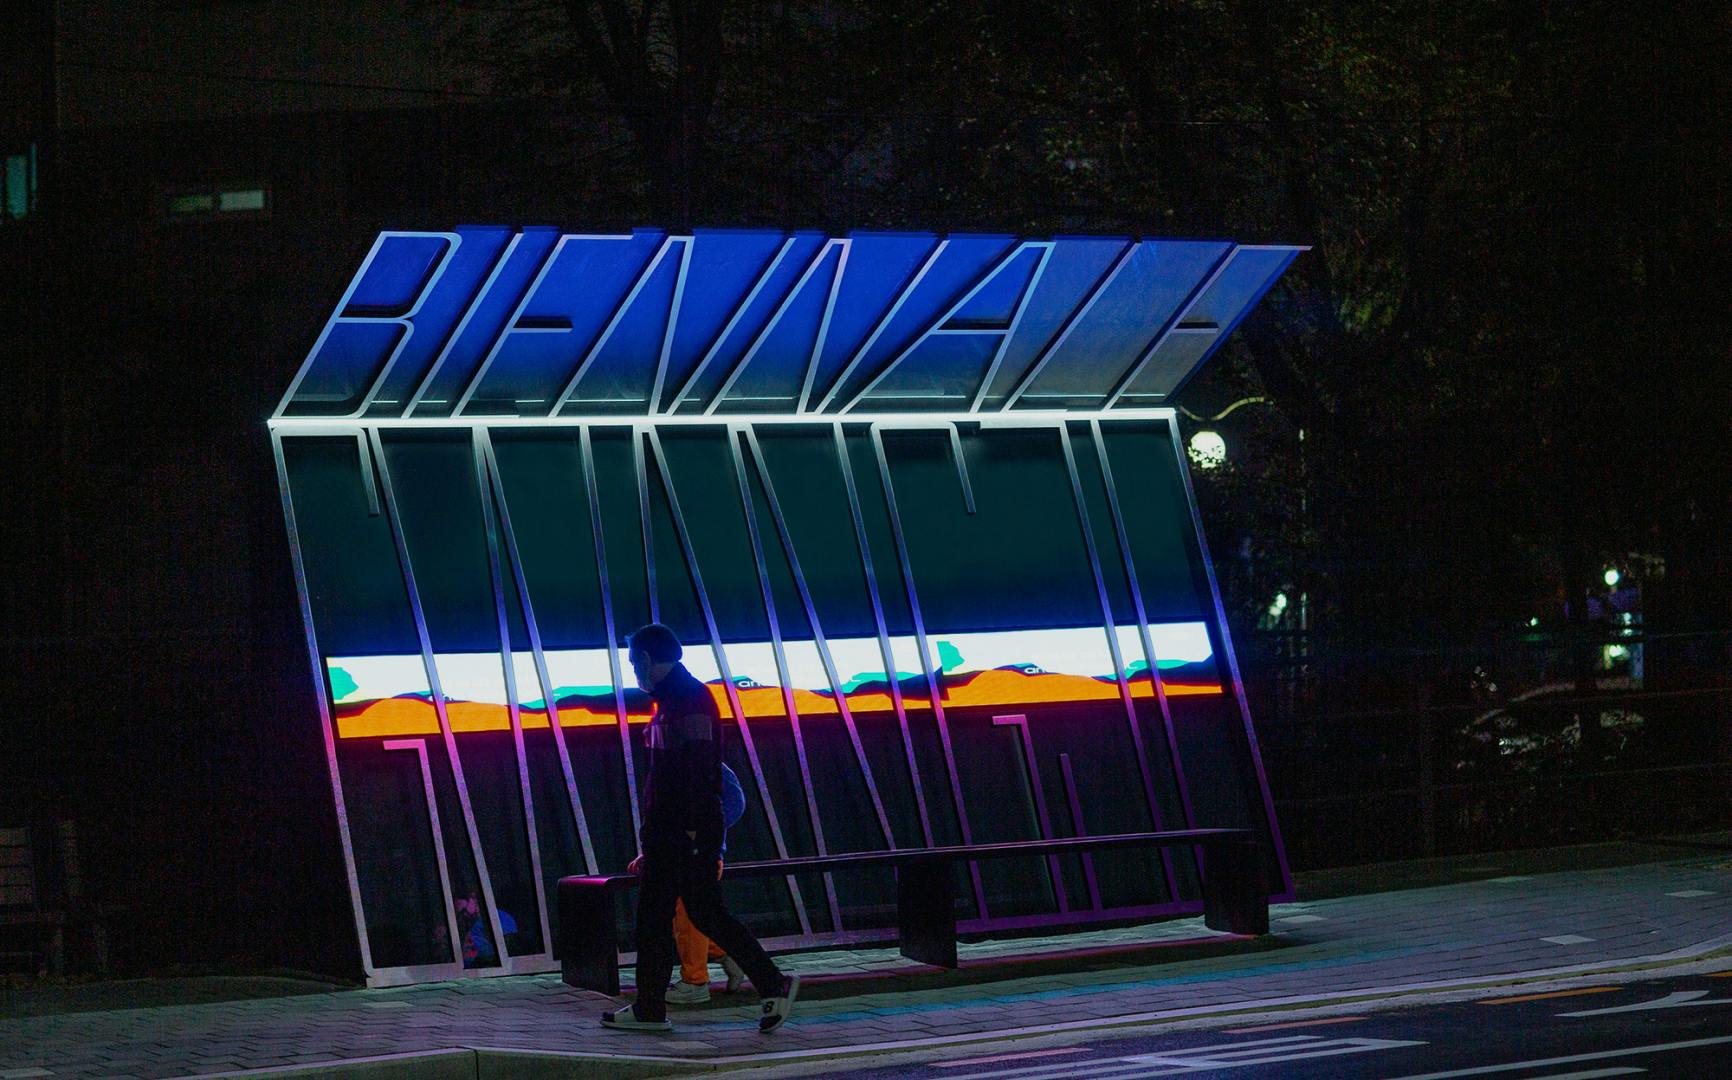 A transit kiosk commemorating the Gwangju Biennale in South Korea